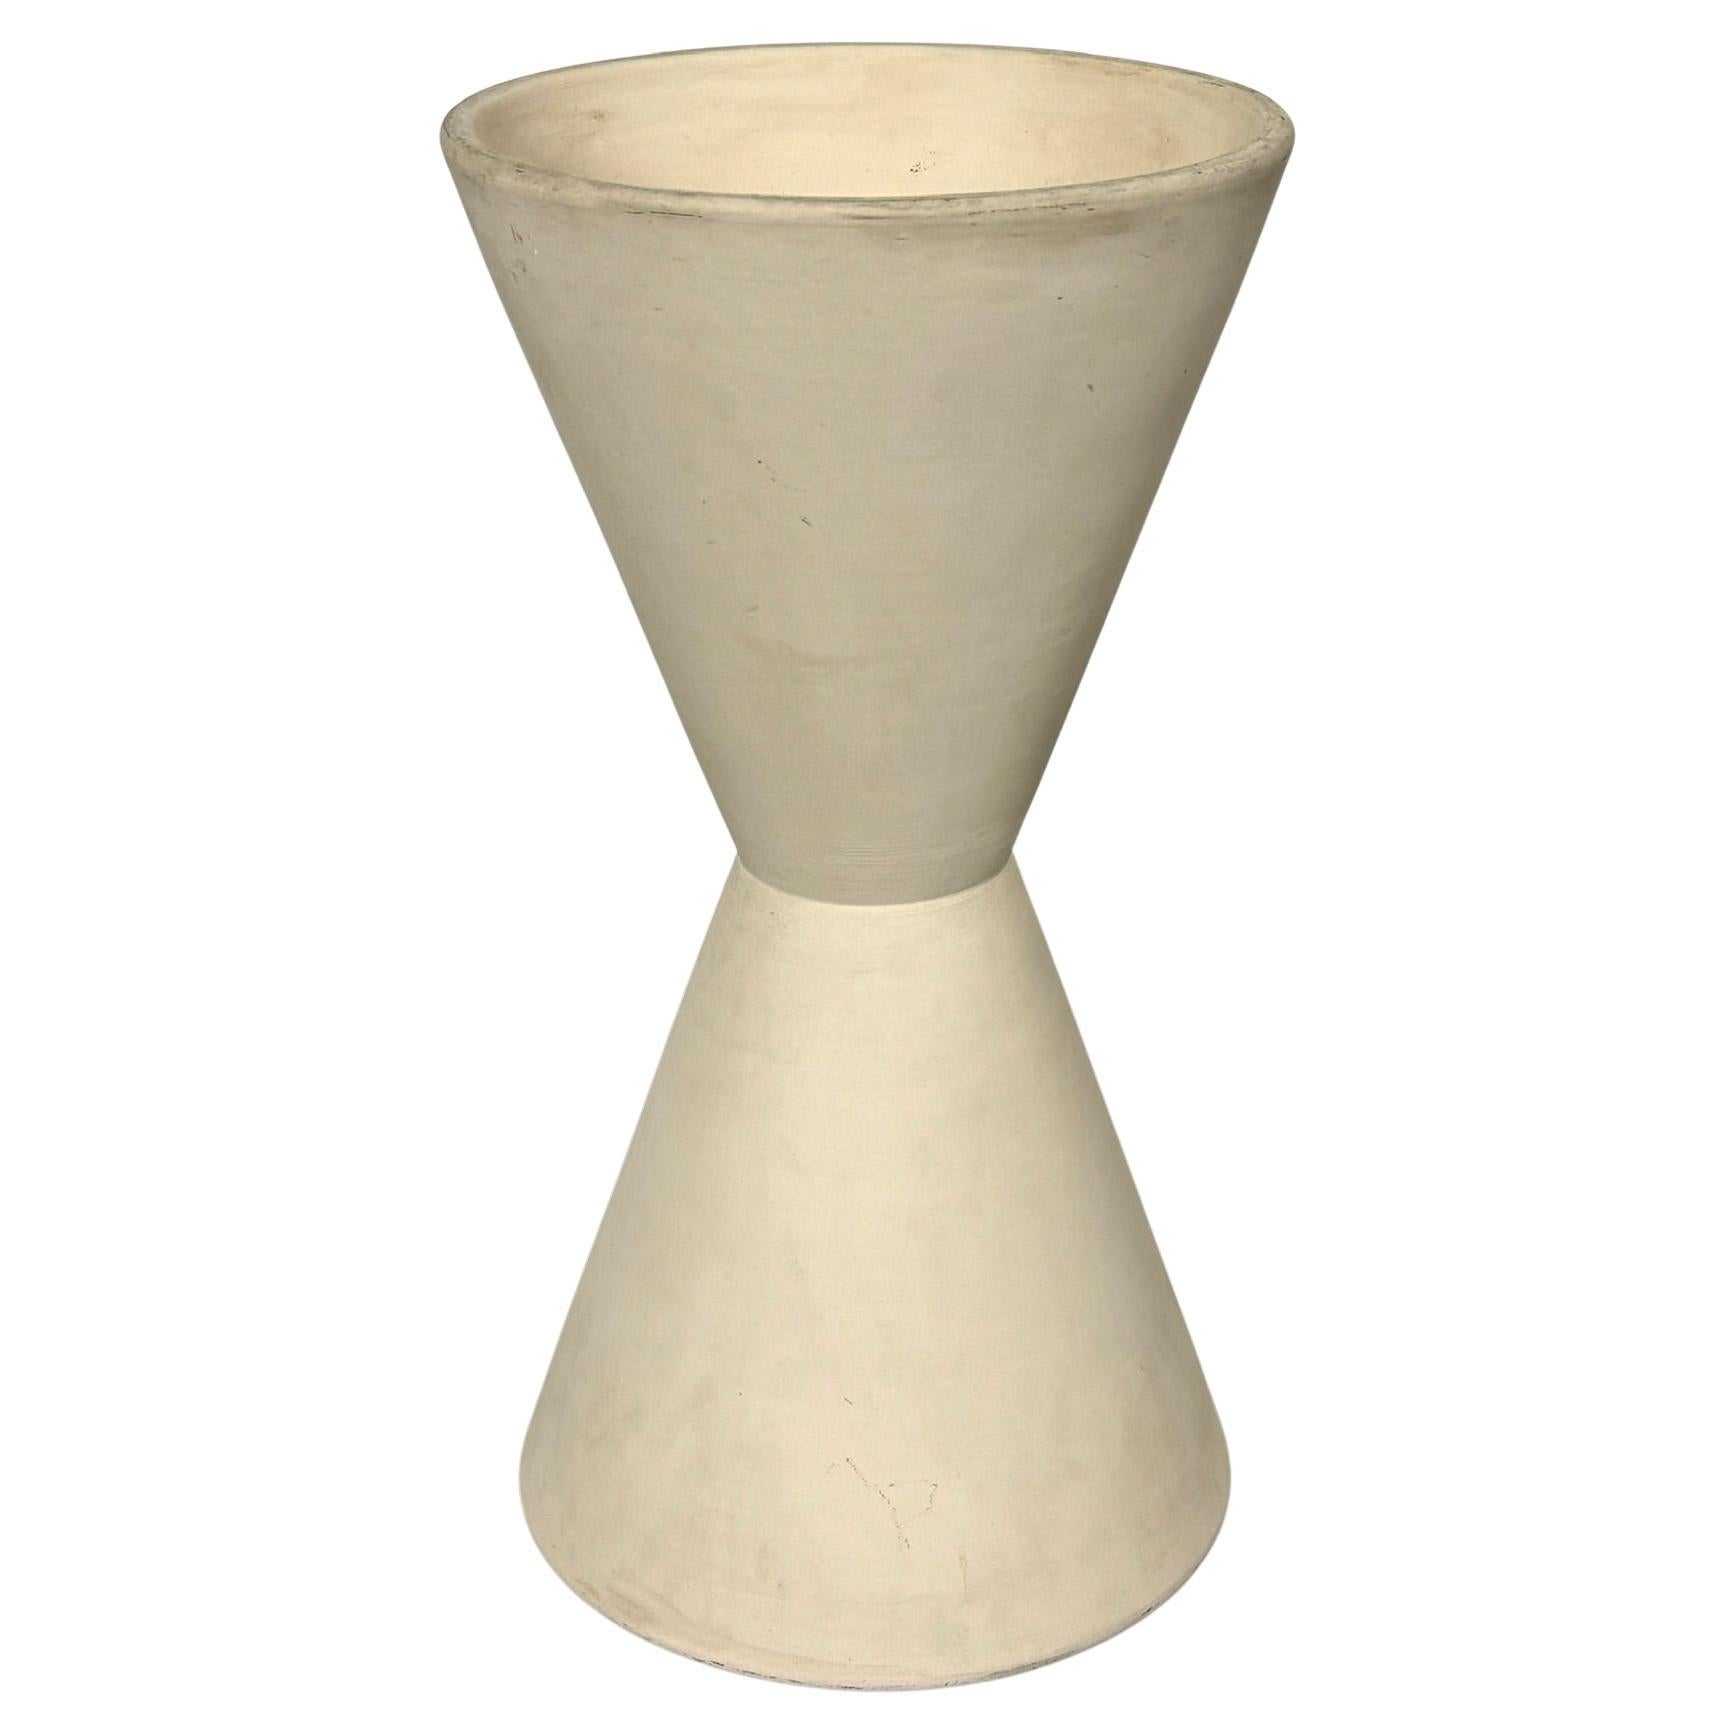 Lagardo Tackett Double Cone Architectural Pottery Pflanzgefäß Biskuit Keramik 1950er Jahre